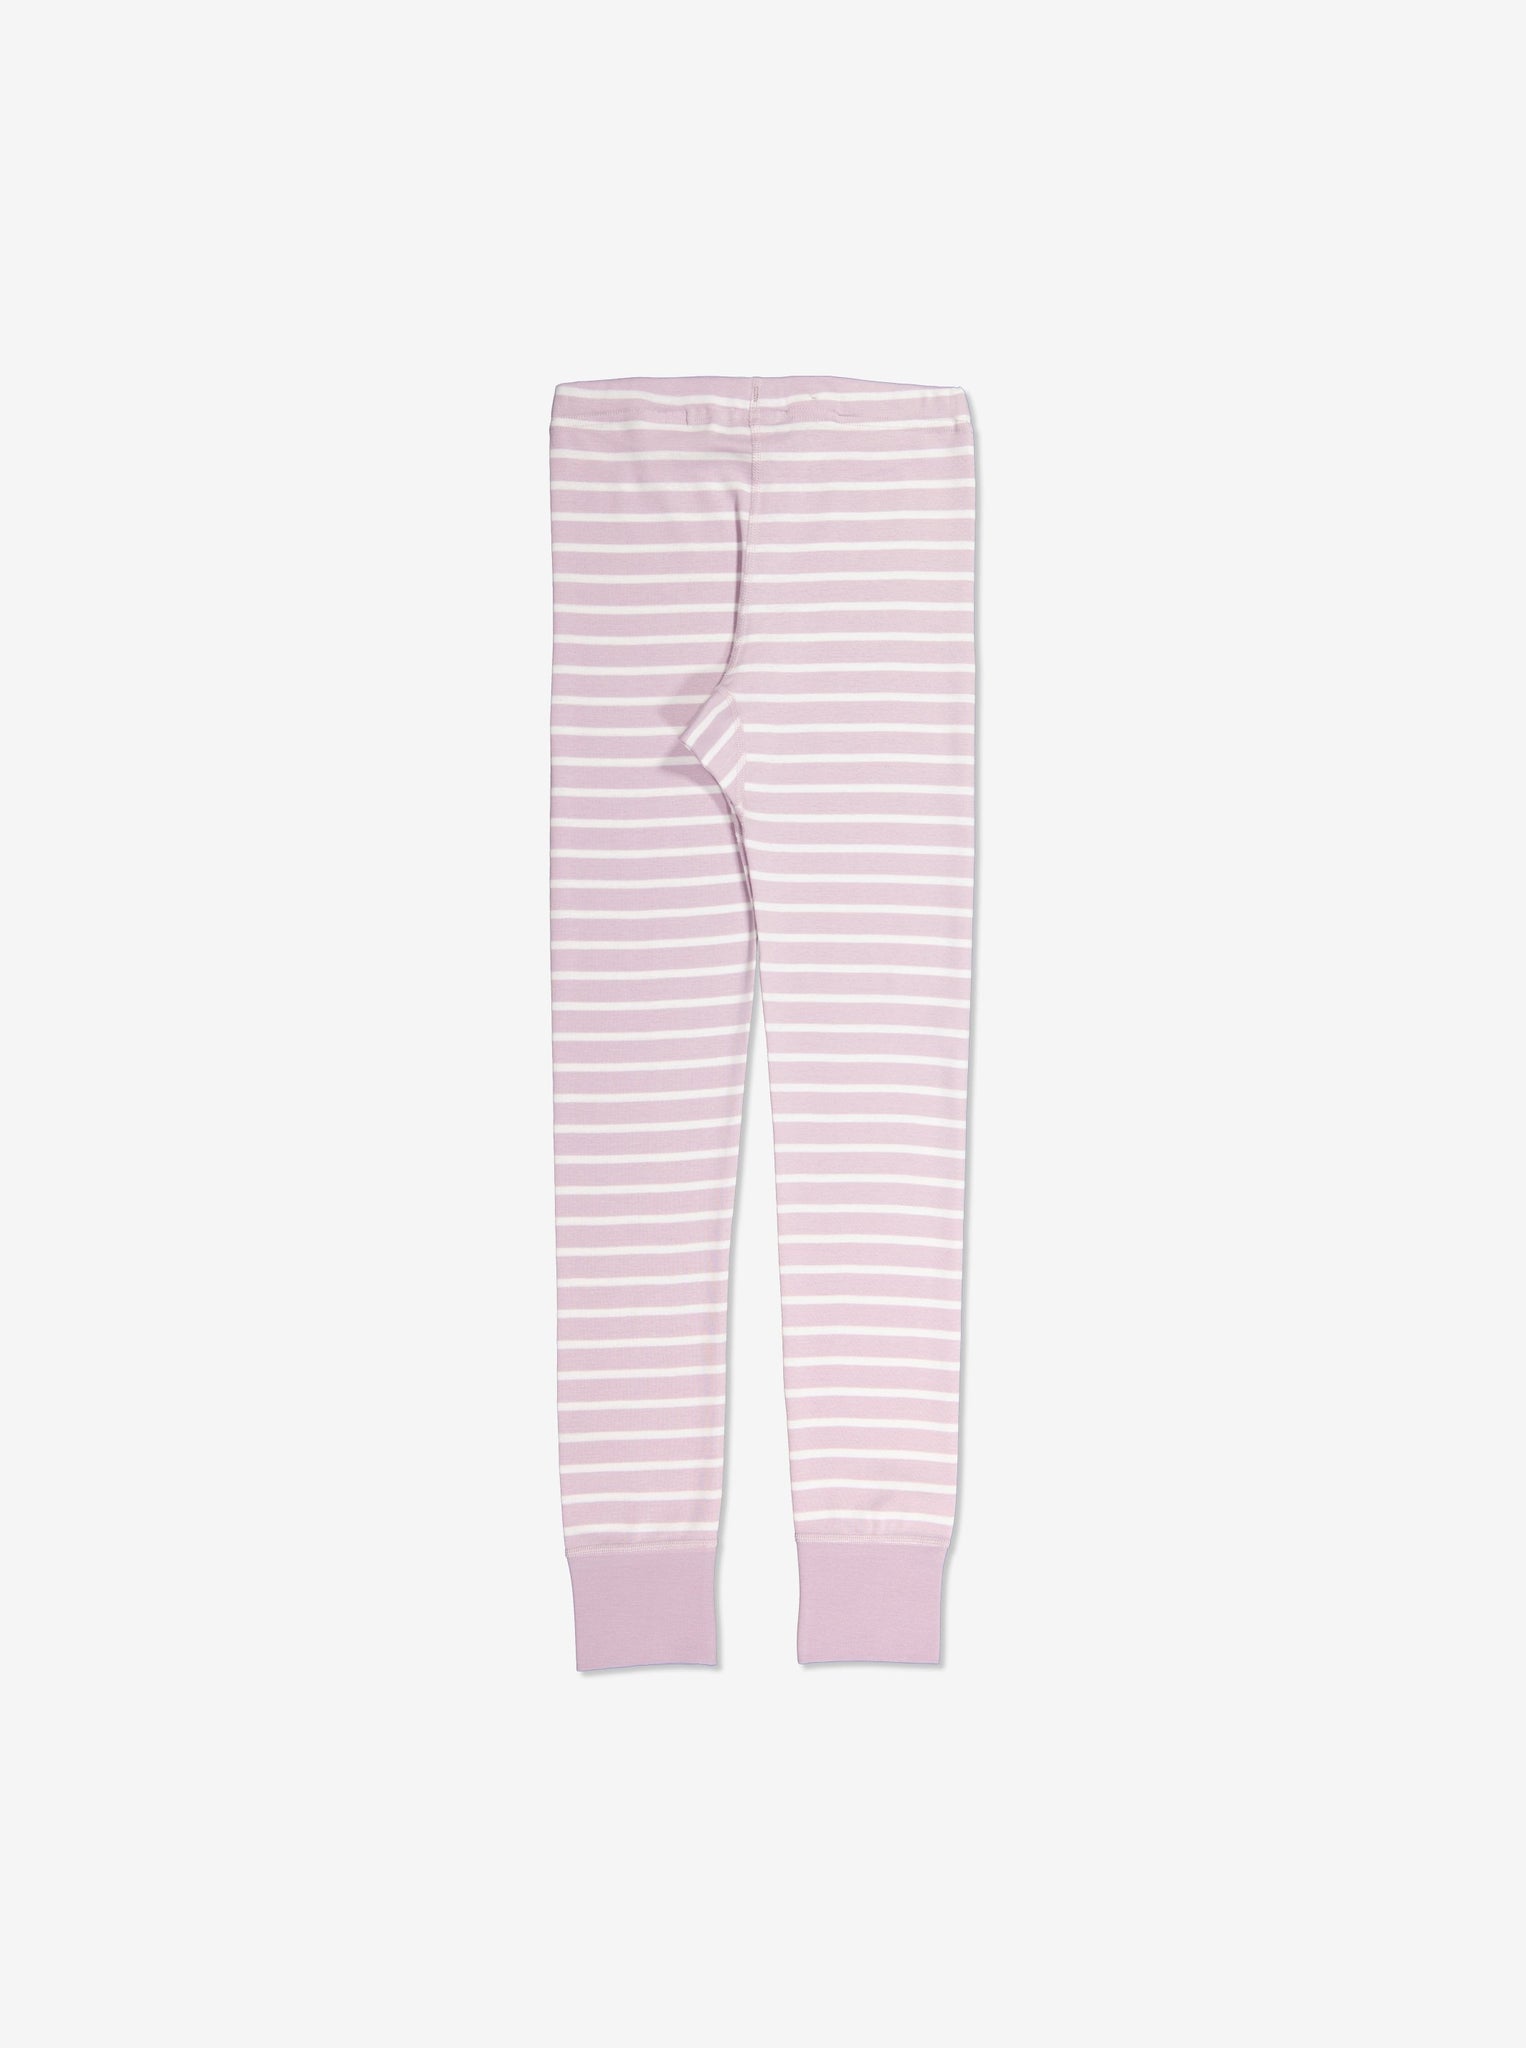  Organic Striped Pink Kids Leggings from Polarn O. Pyret Kidswear. Made with 100% organic cotton.